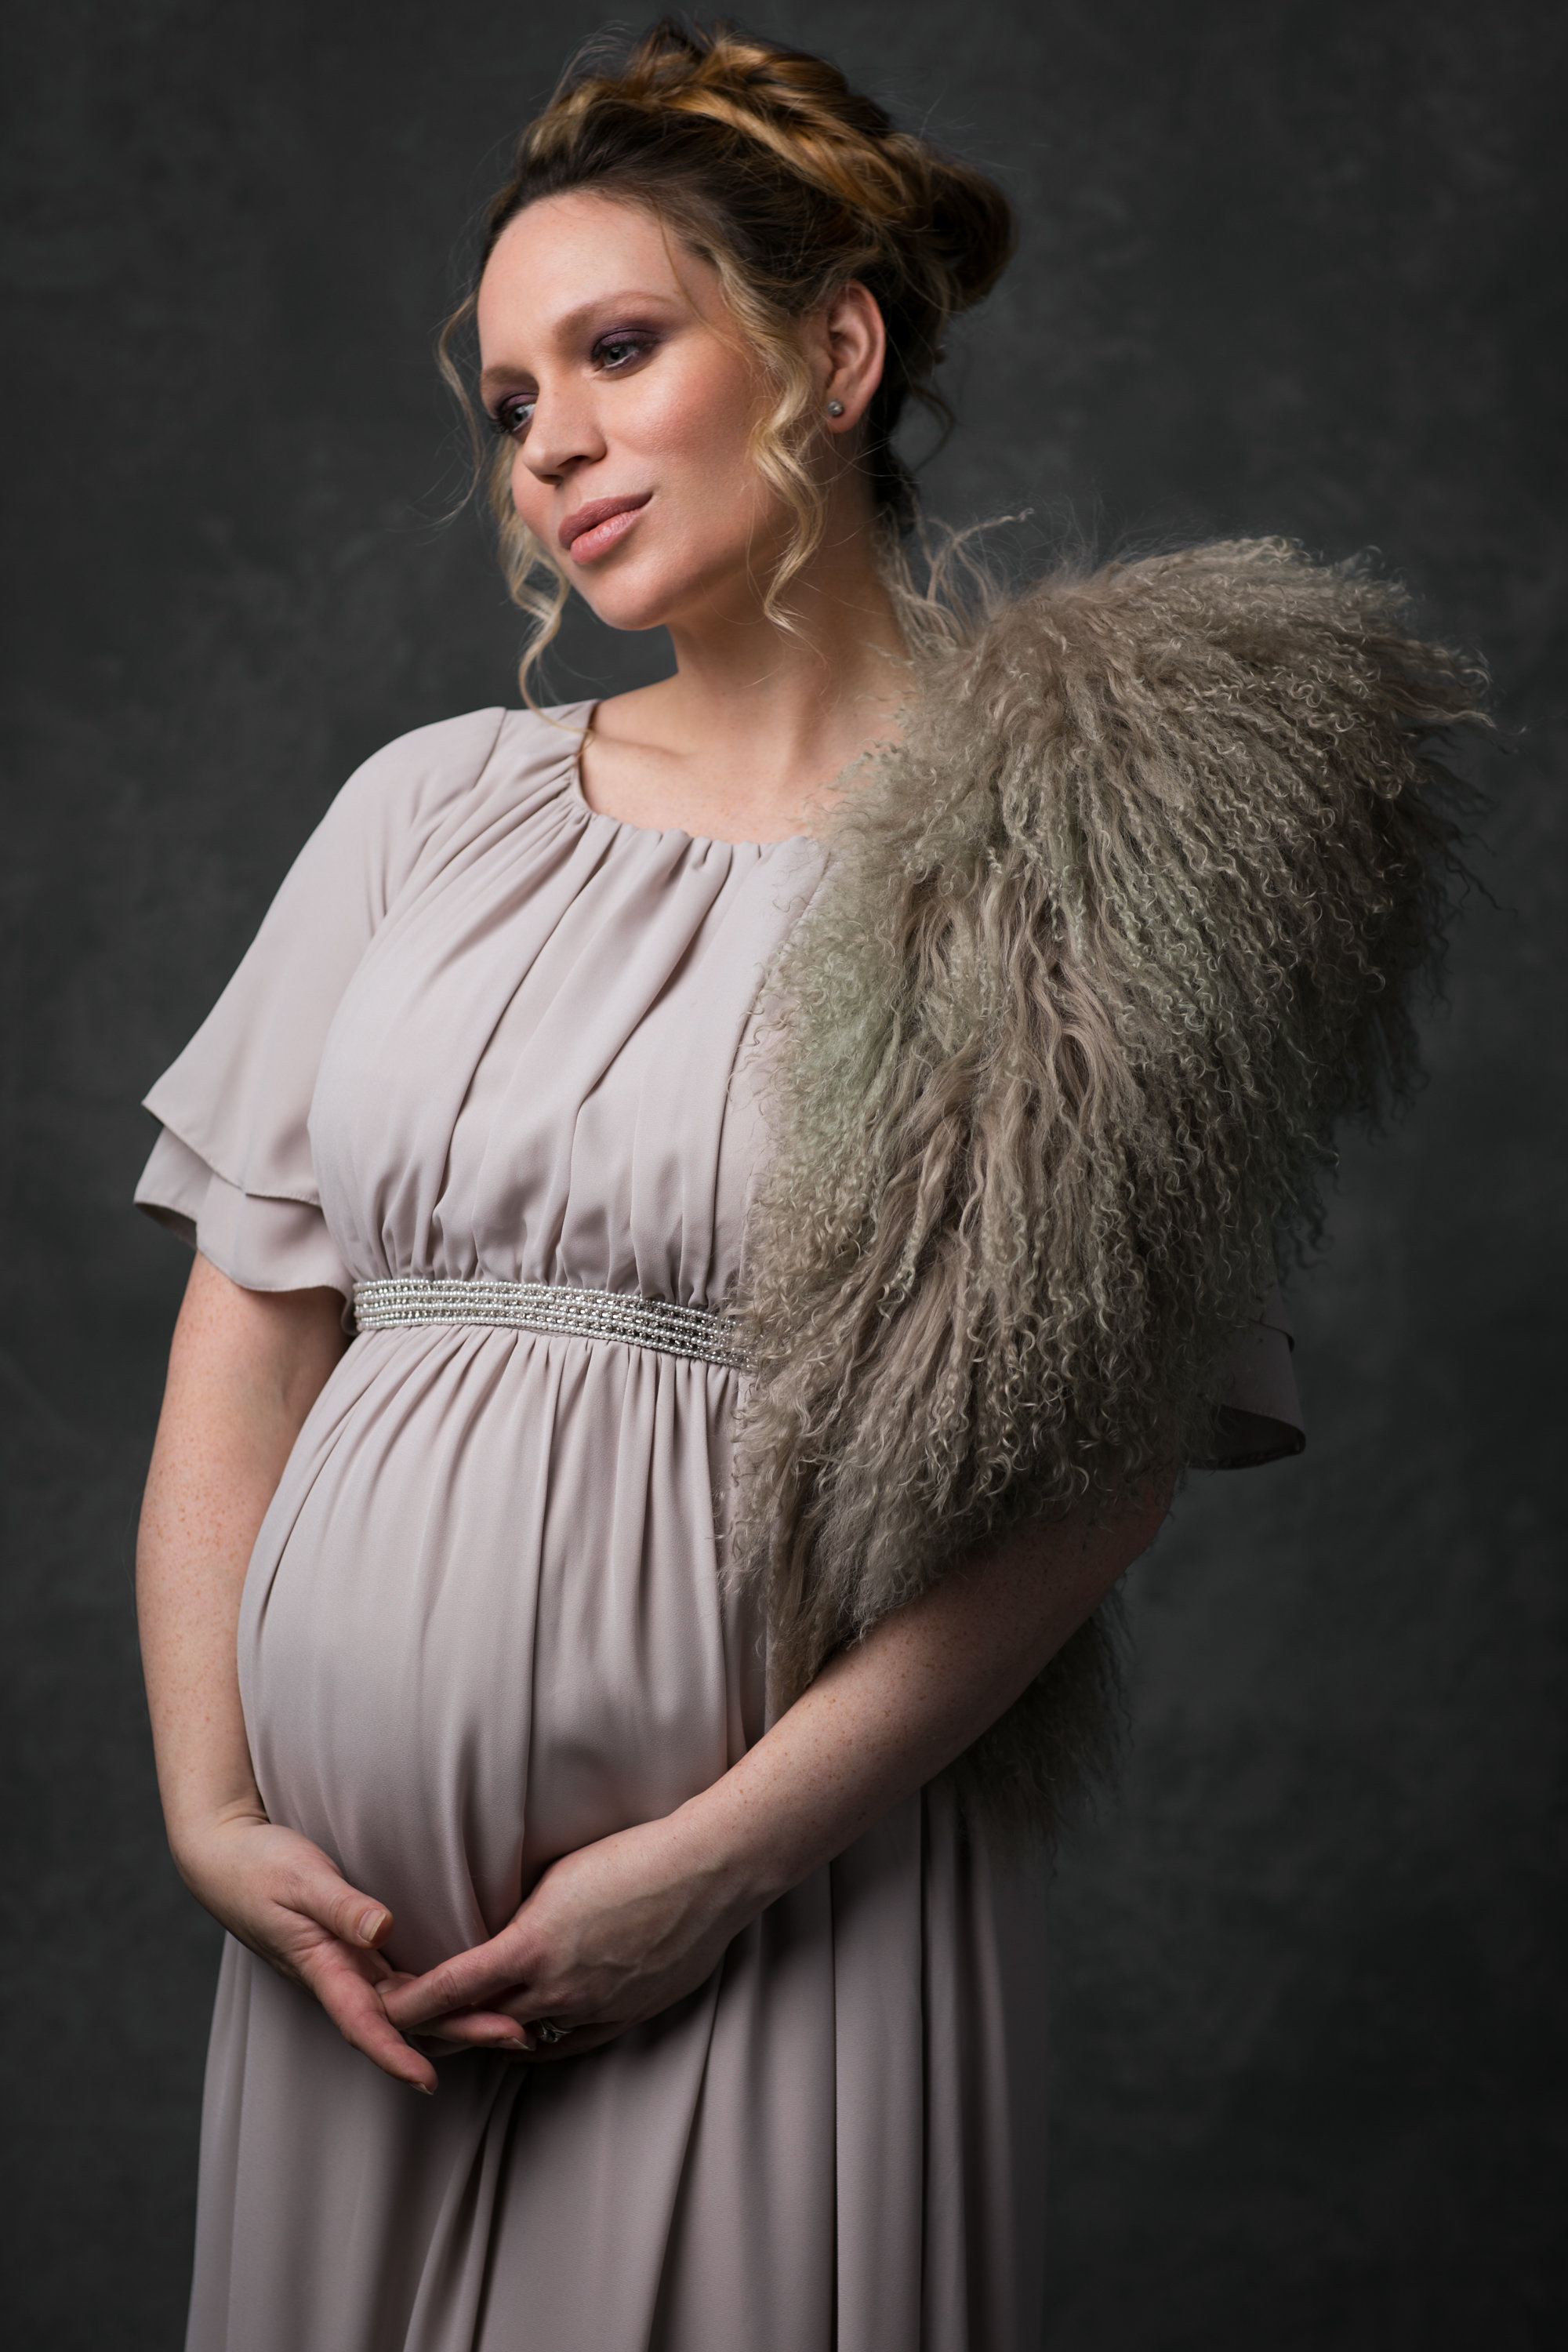 editorial maternity nicole romanoff photography 5.jpg